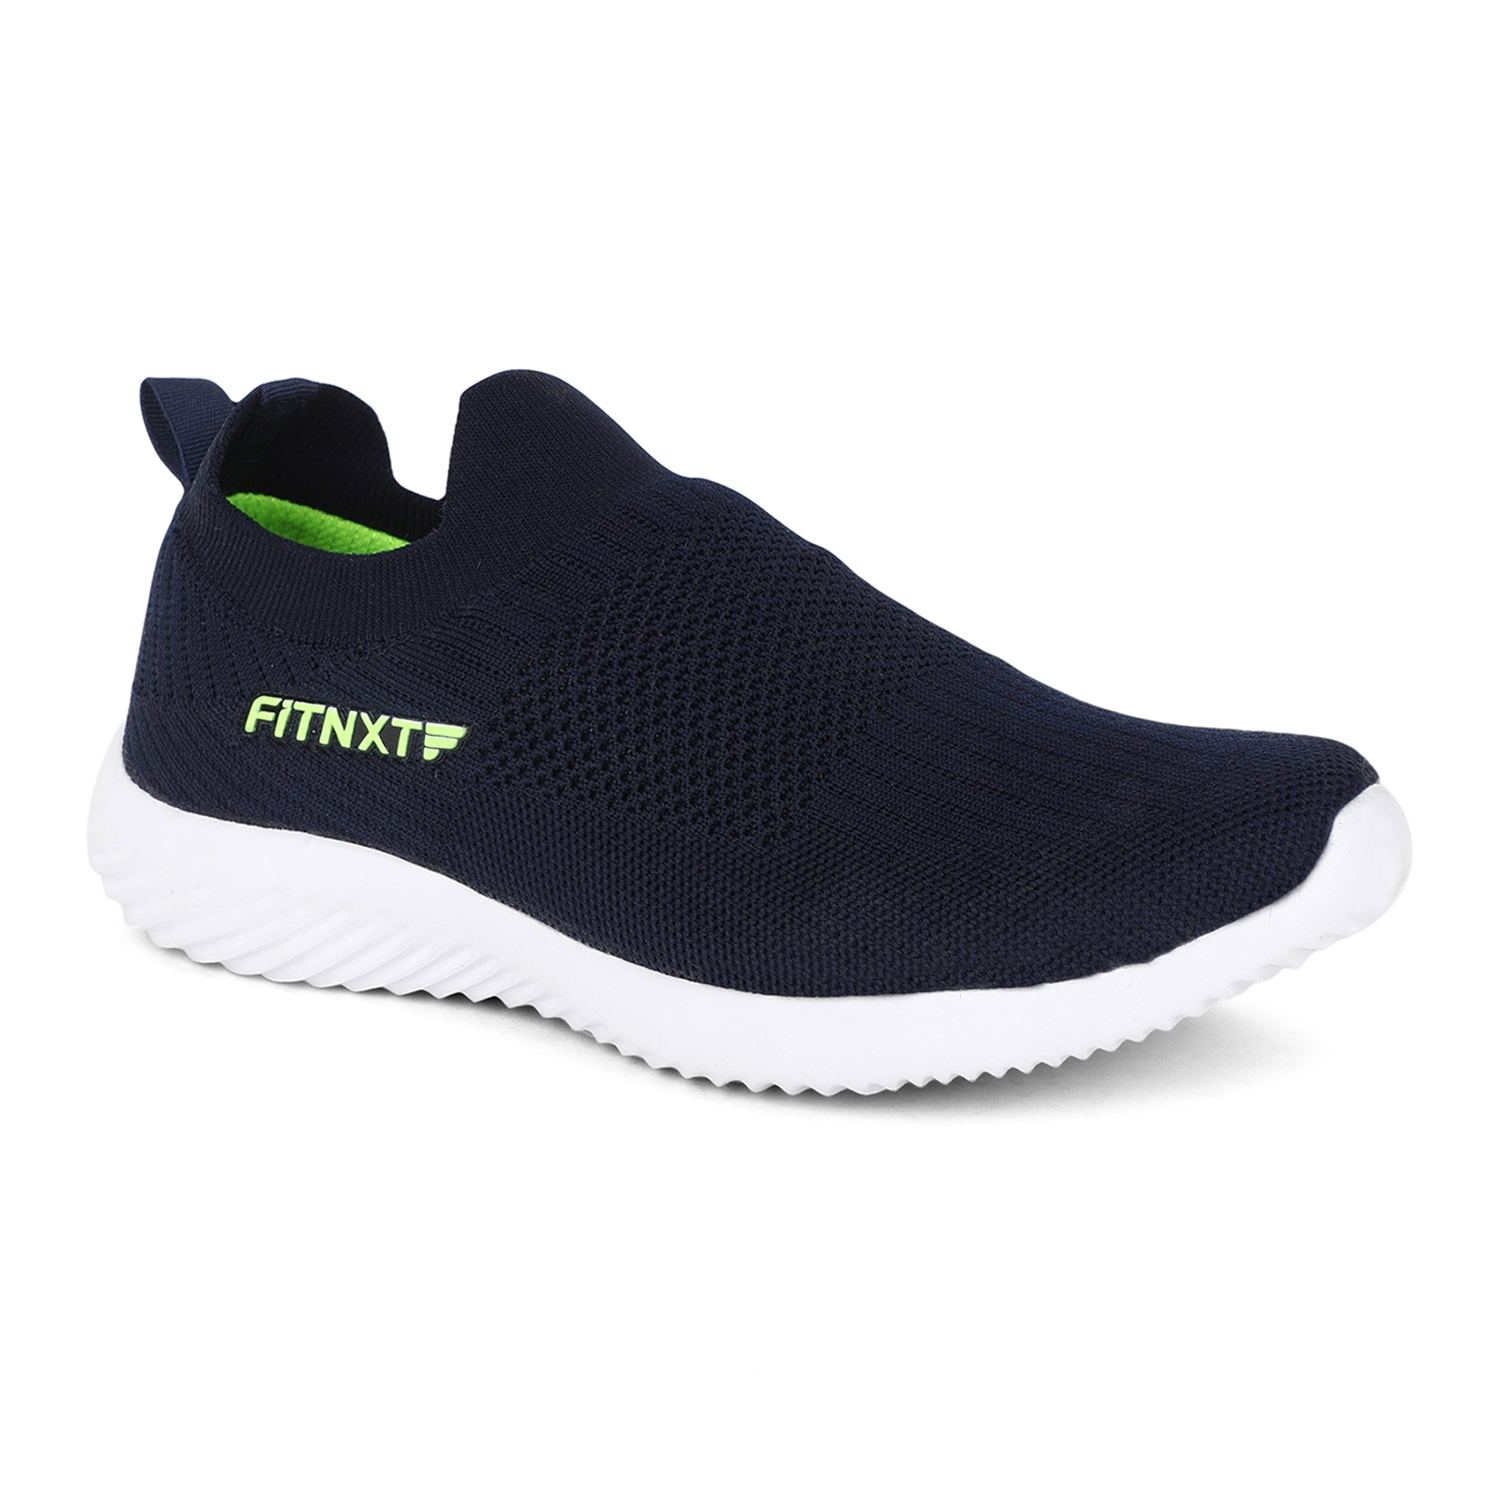 Khadim | Fitnxt By Khadim's Phylon Sole Knitting Navy Sports Shoes For Men